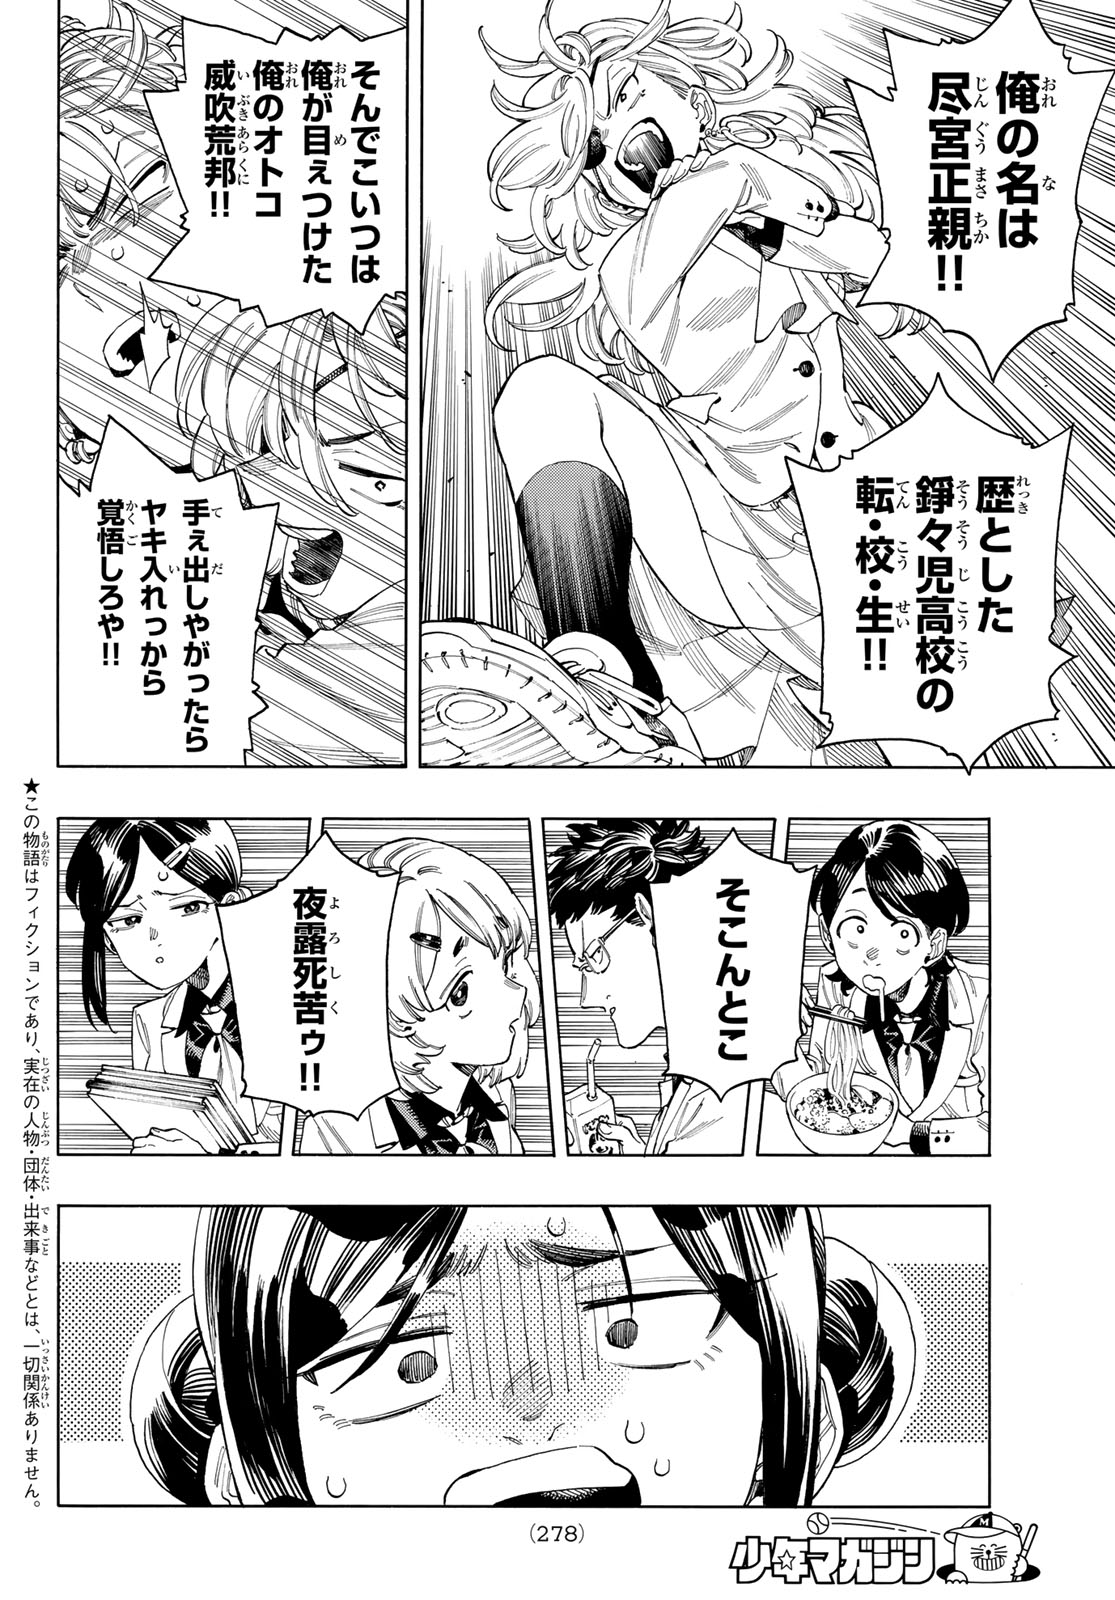 Akabane Honeko no Bodyguard - Chapter 77 - Page 2